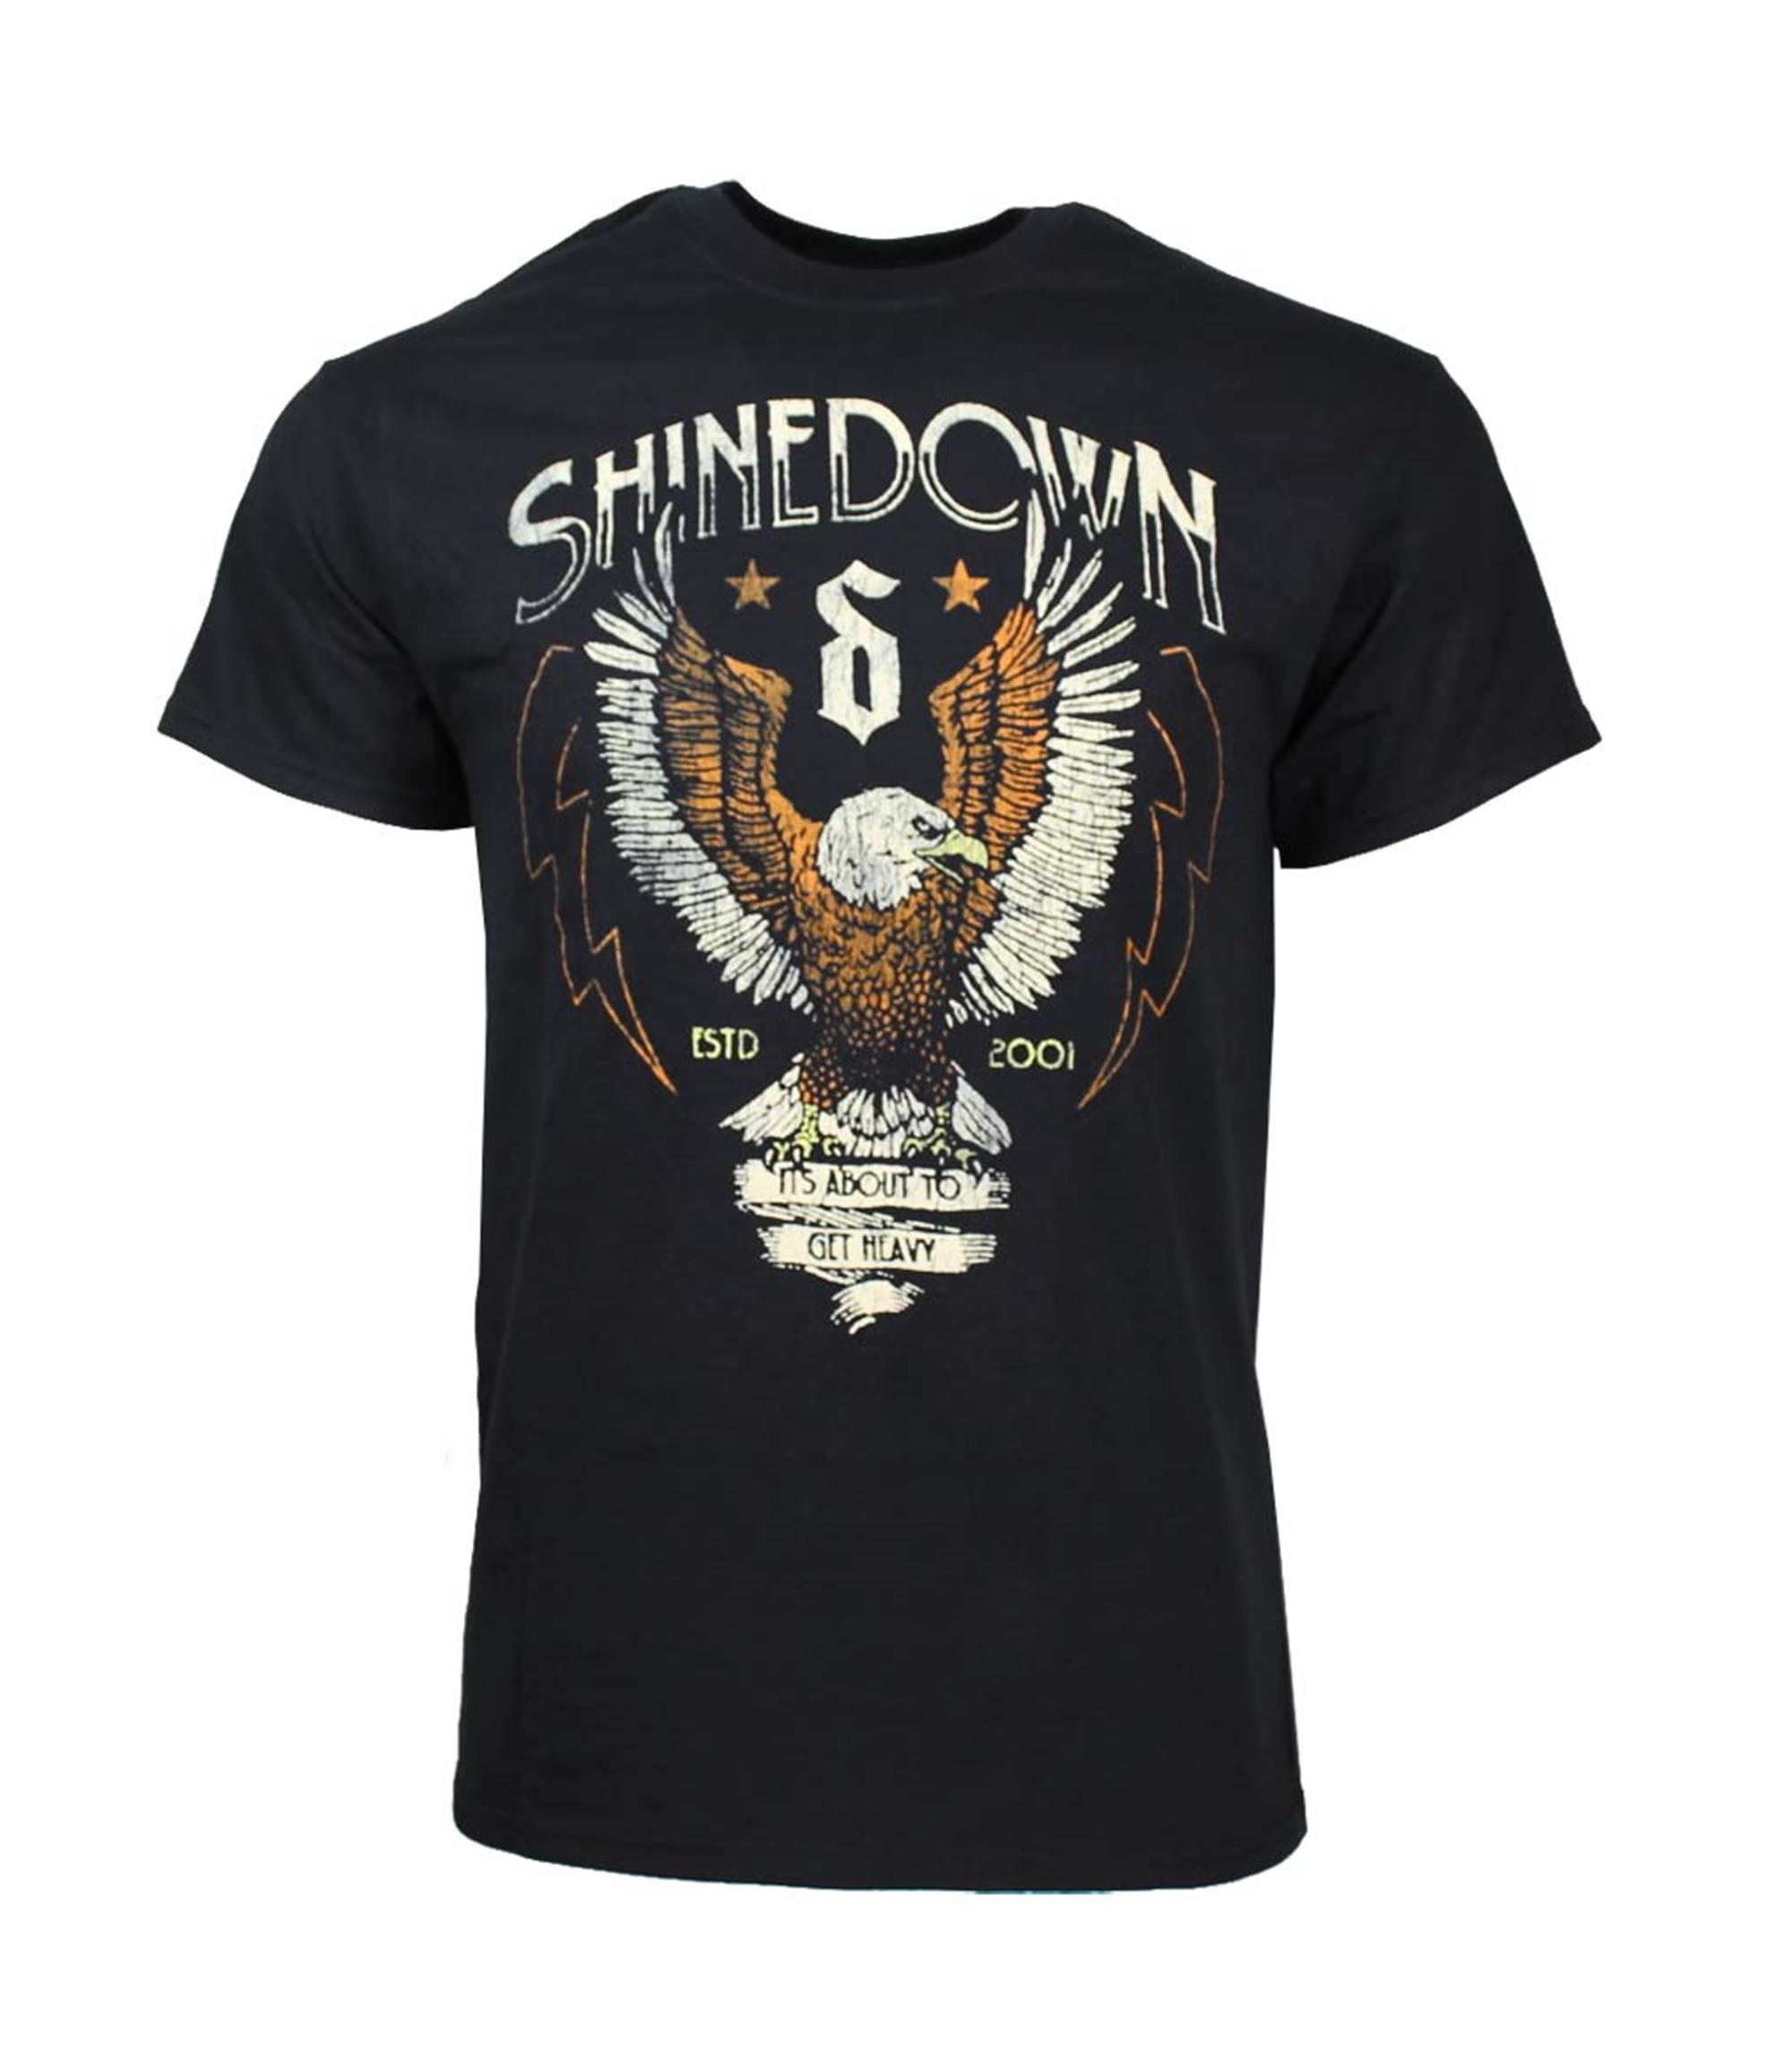 shinedown shirts